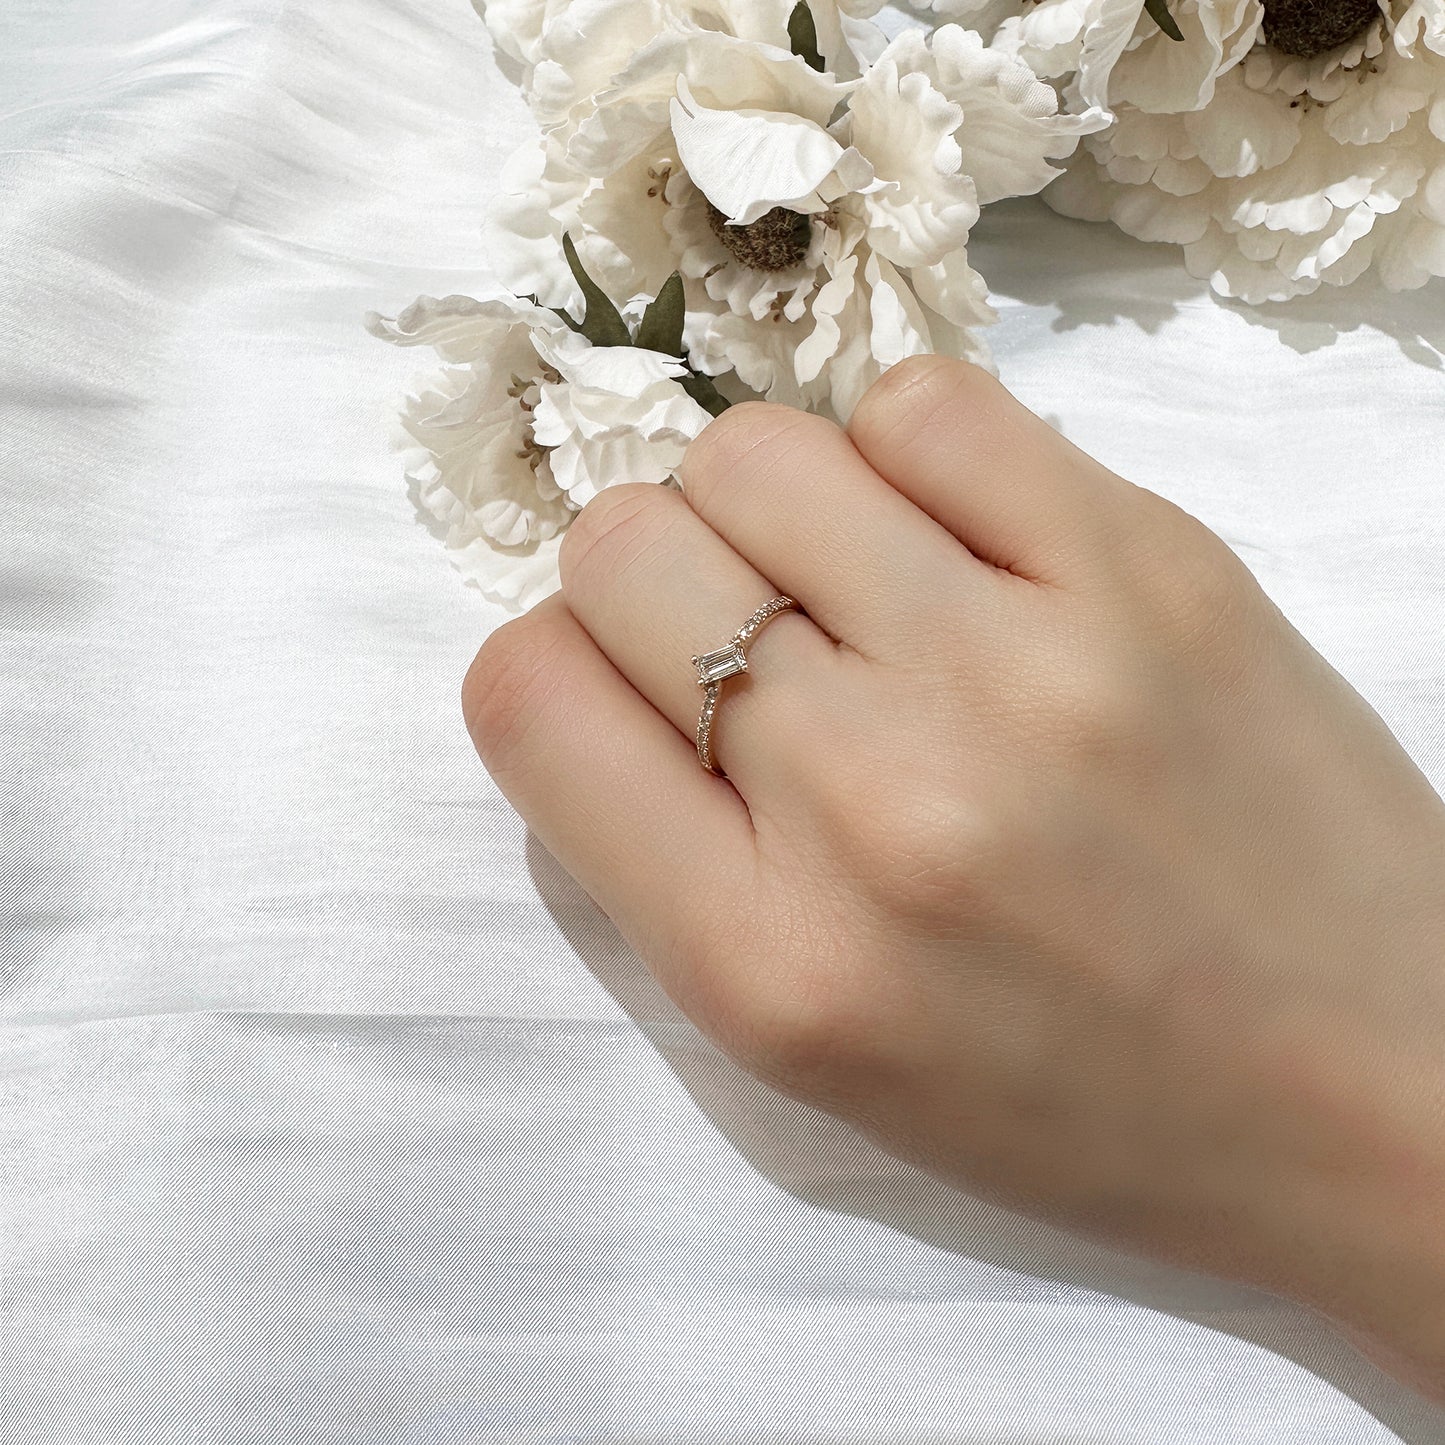 18k玫瑰金長方鑽石戒指在中指上 18k Rose Gold Asymmetrical Baguette Diamond Ring on middle finger